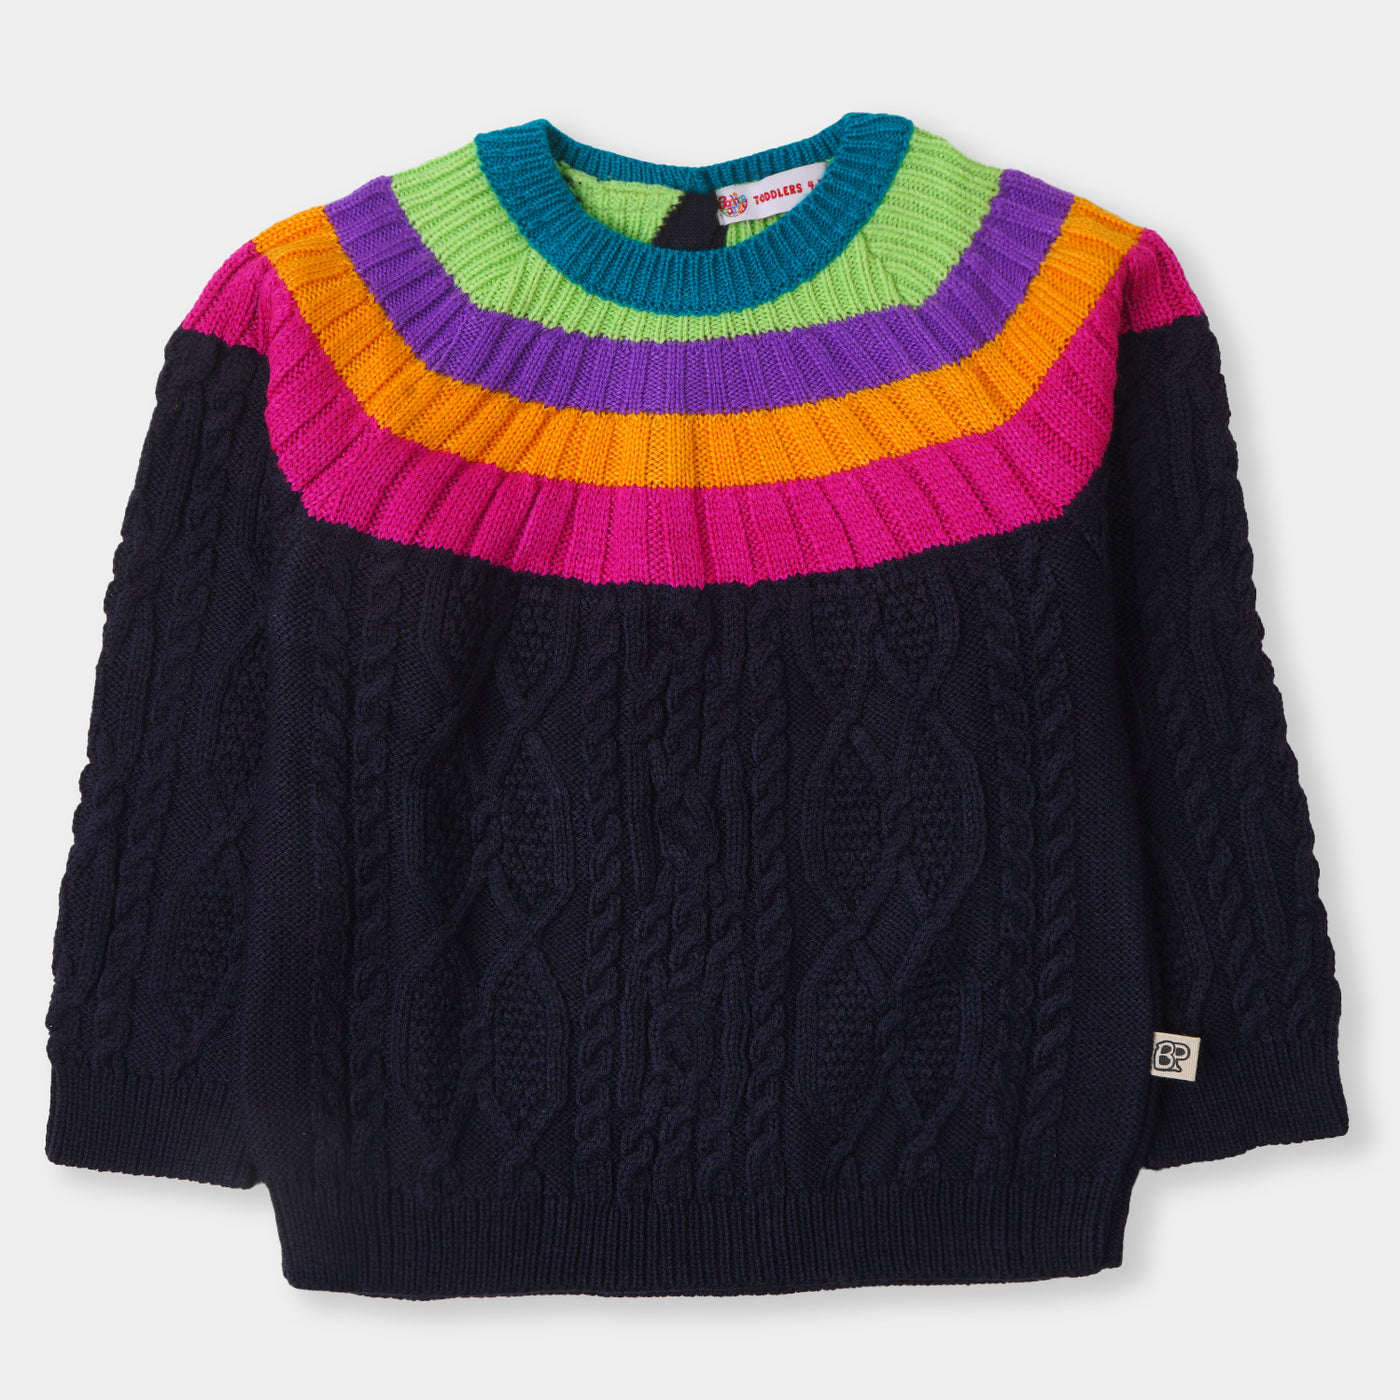 Girls Sweater BP17-22 - Multi